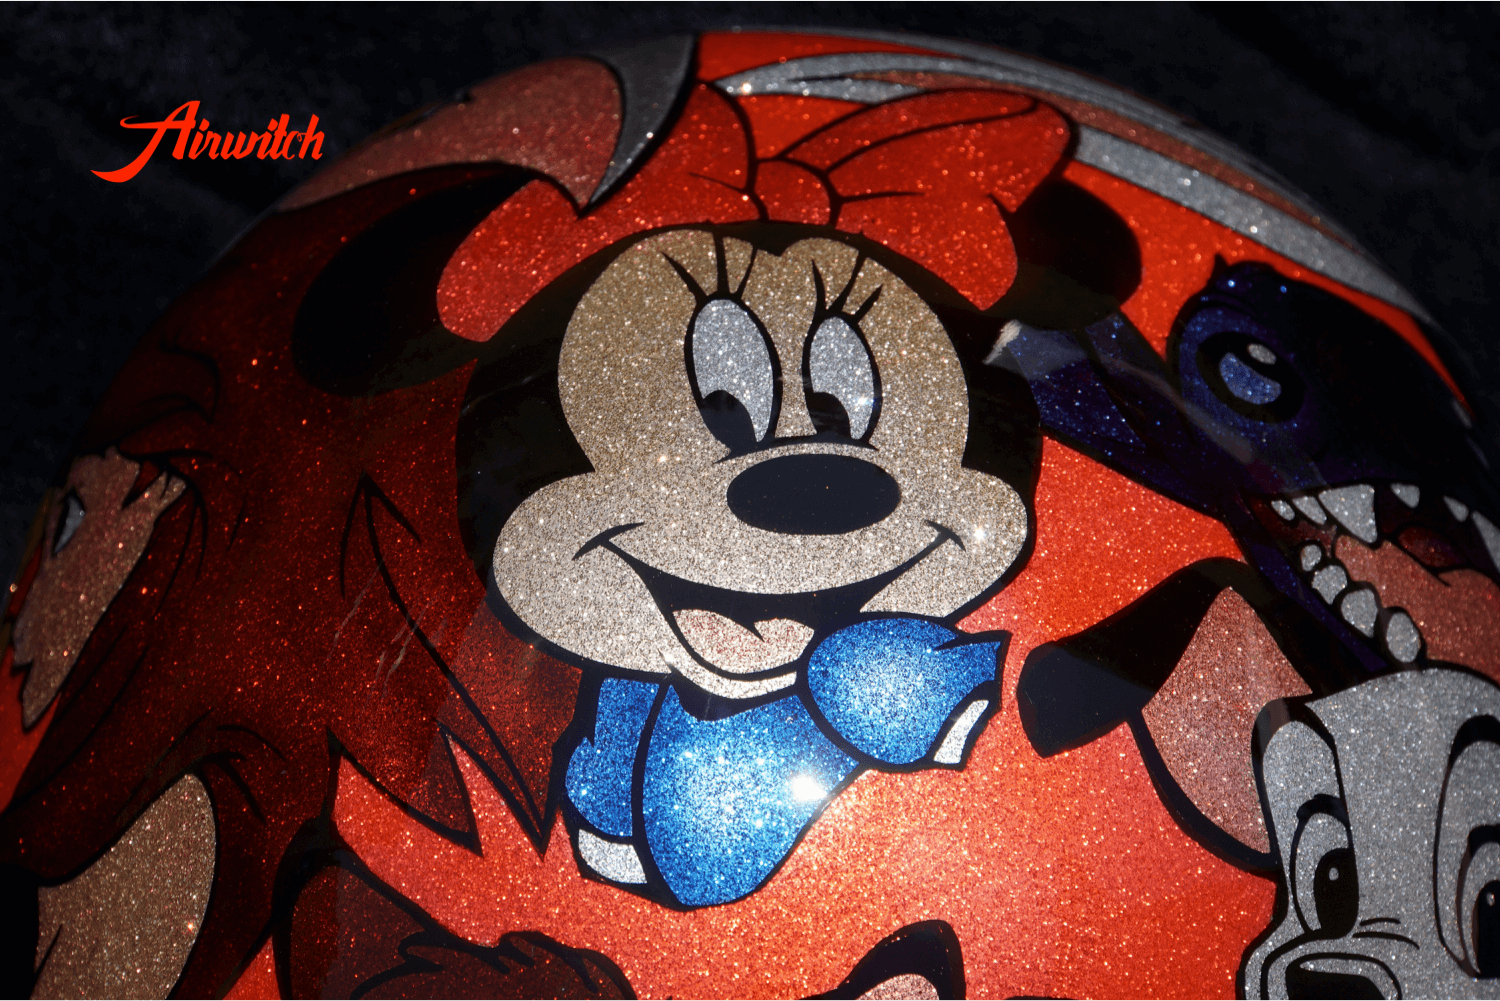 Helm mit Mickey Mouse auf feinen silbernen Metall Flakes